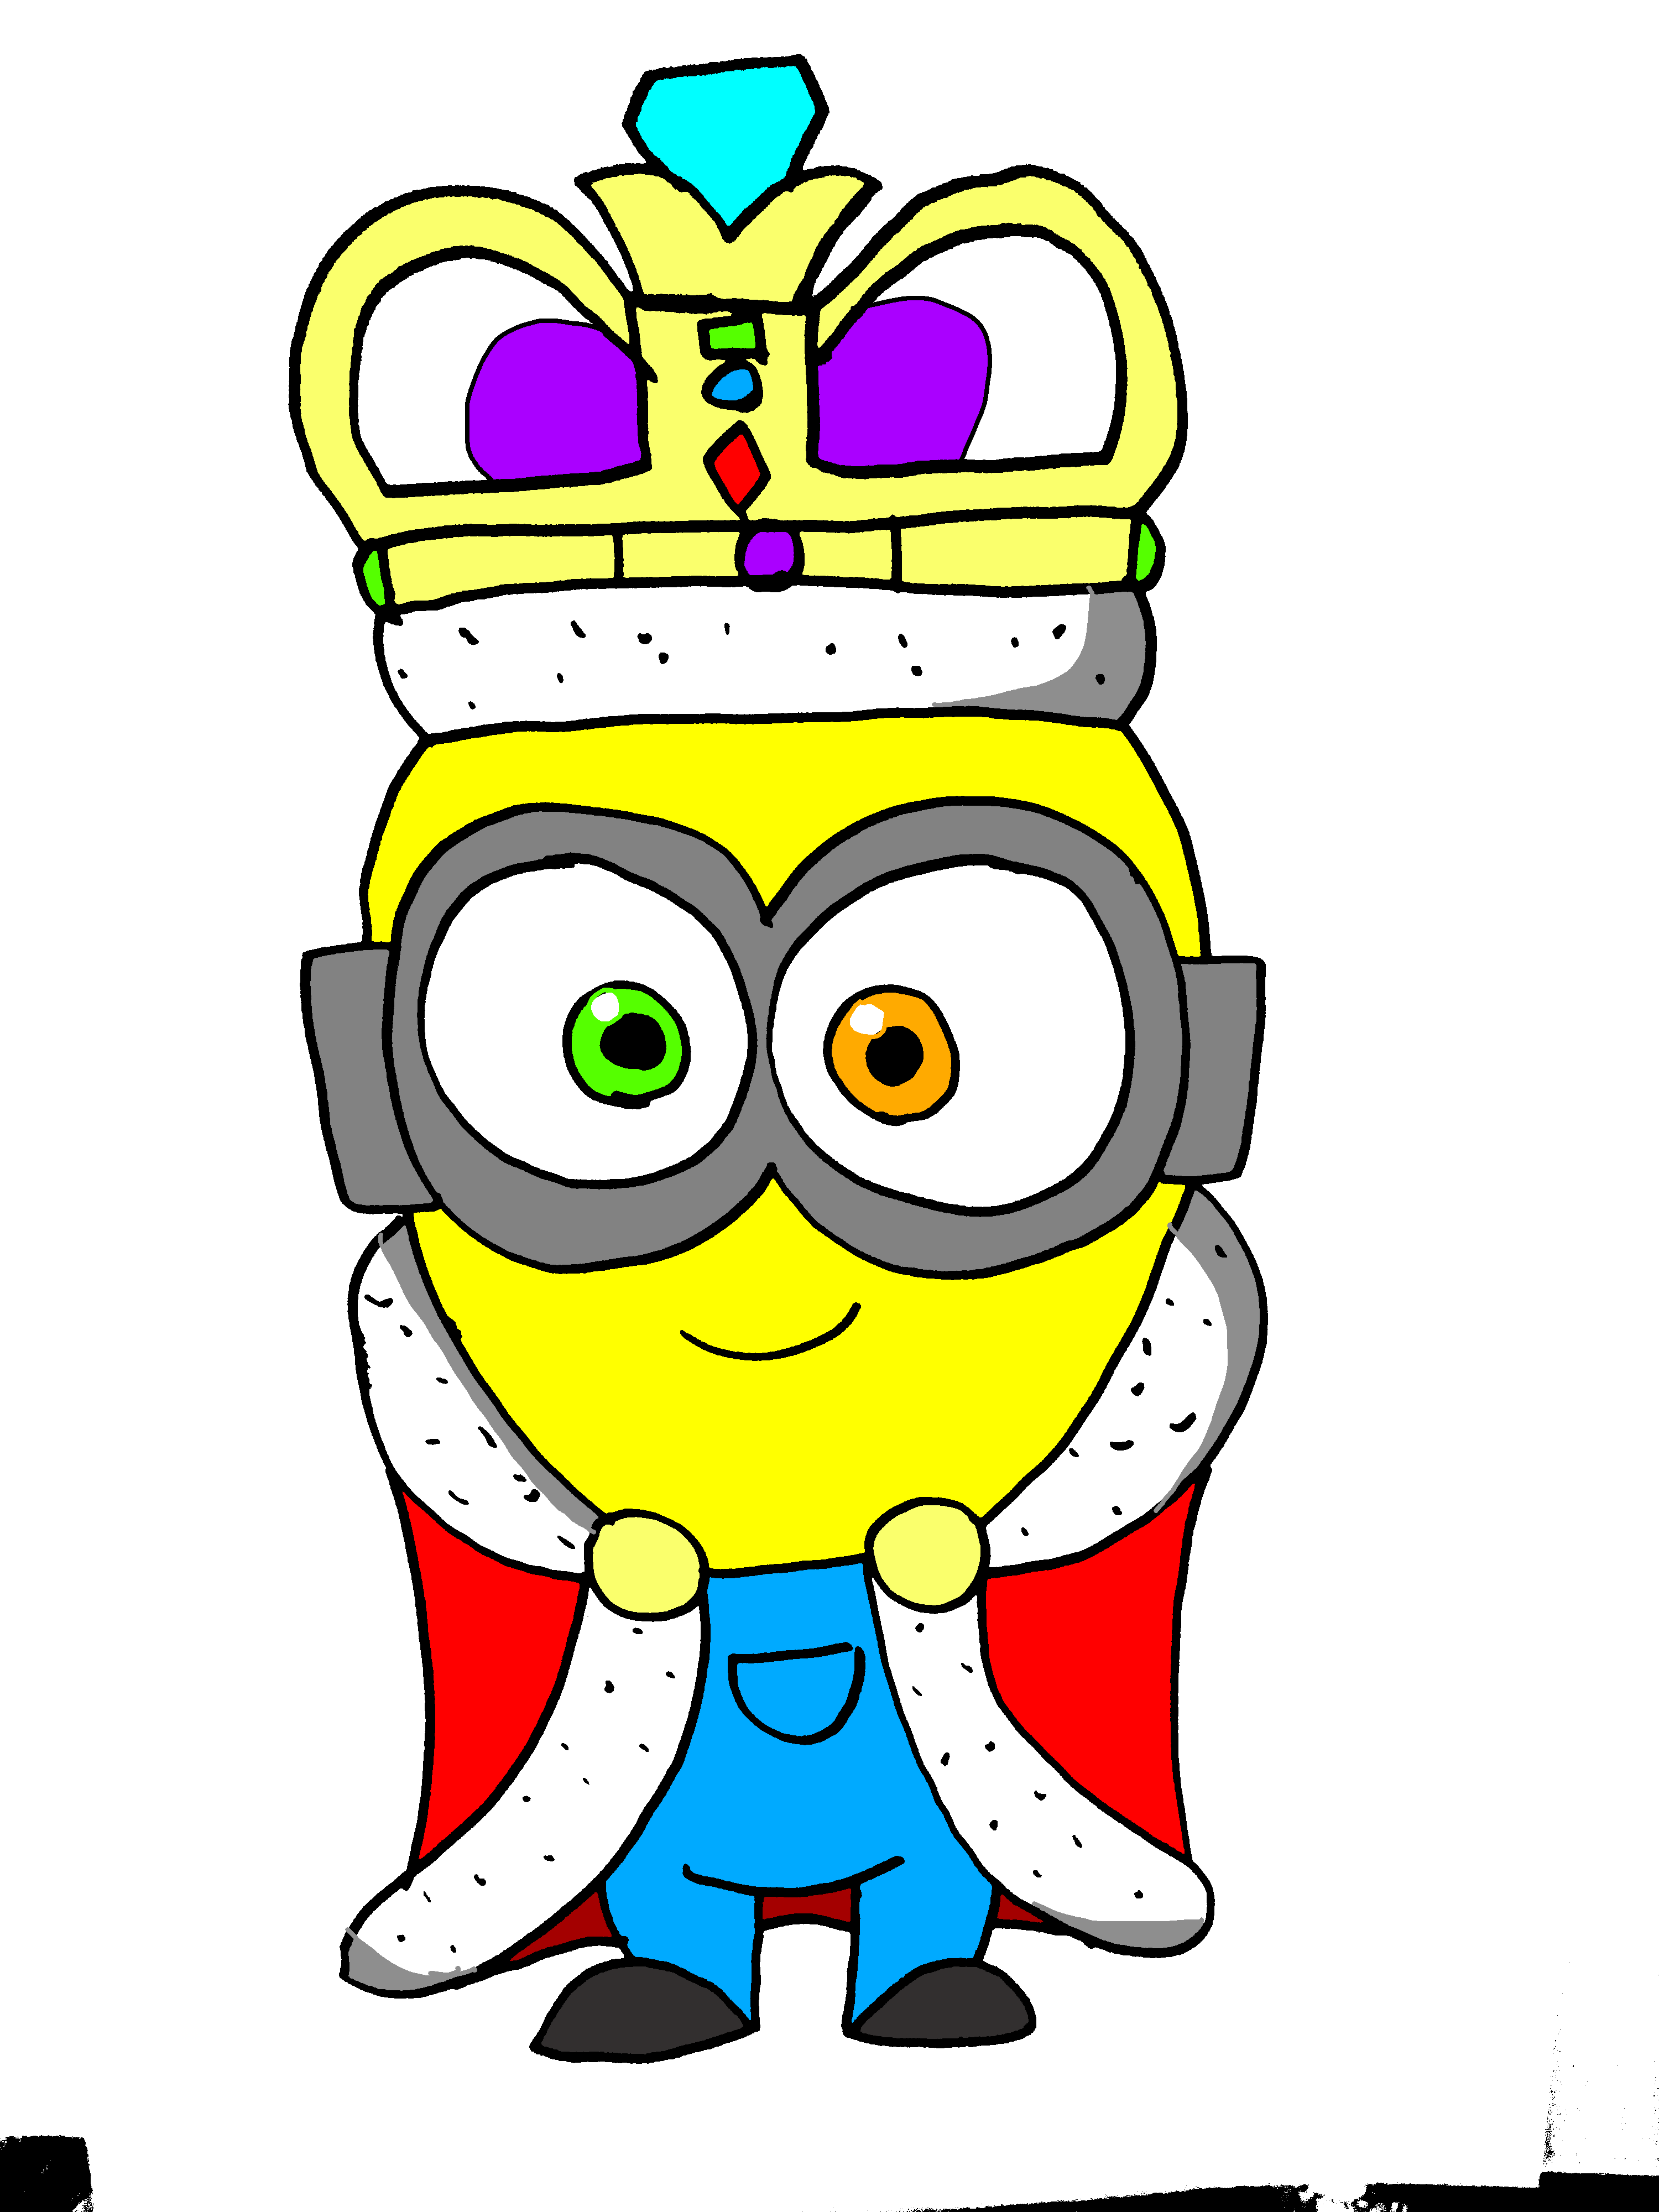 My digital drawing of King Bob Fandom